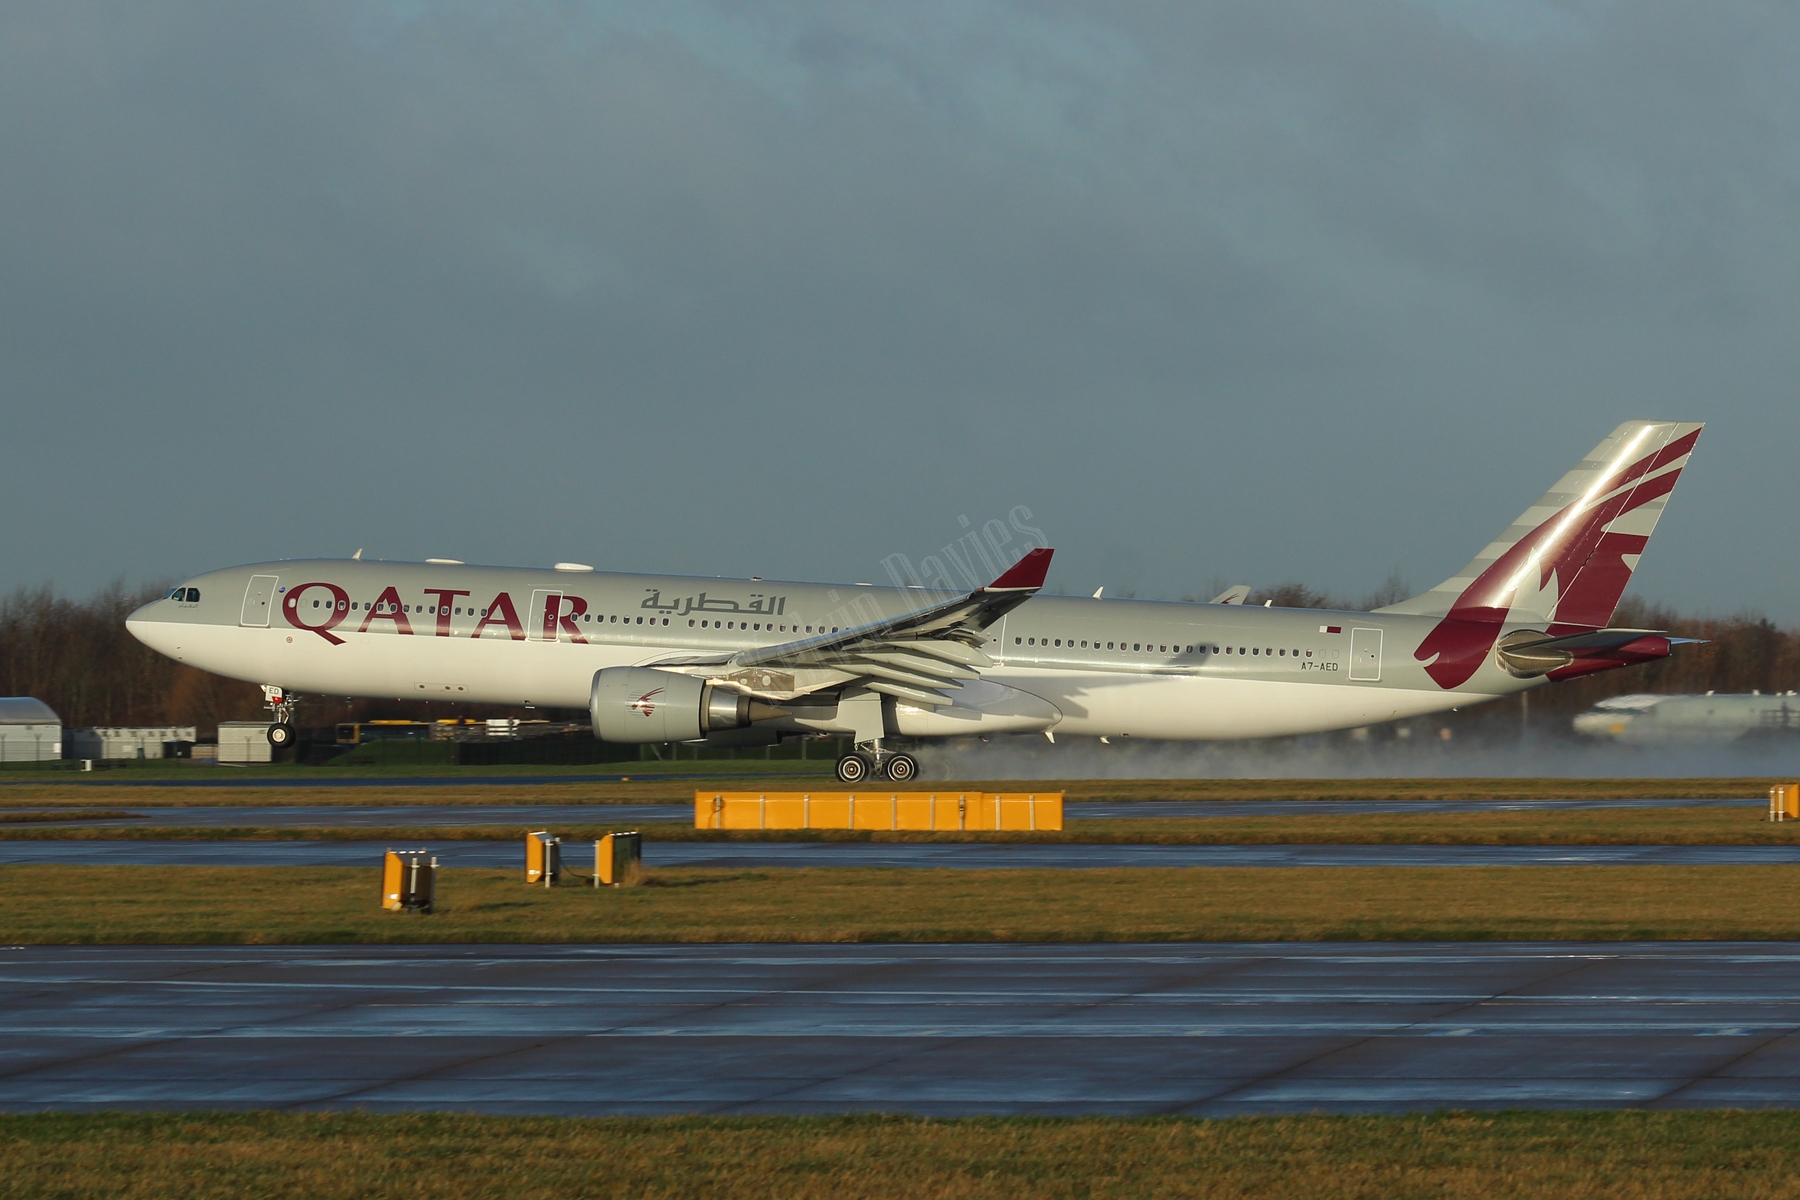 Qatar Airways A330 A7-AED